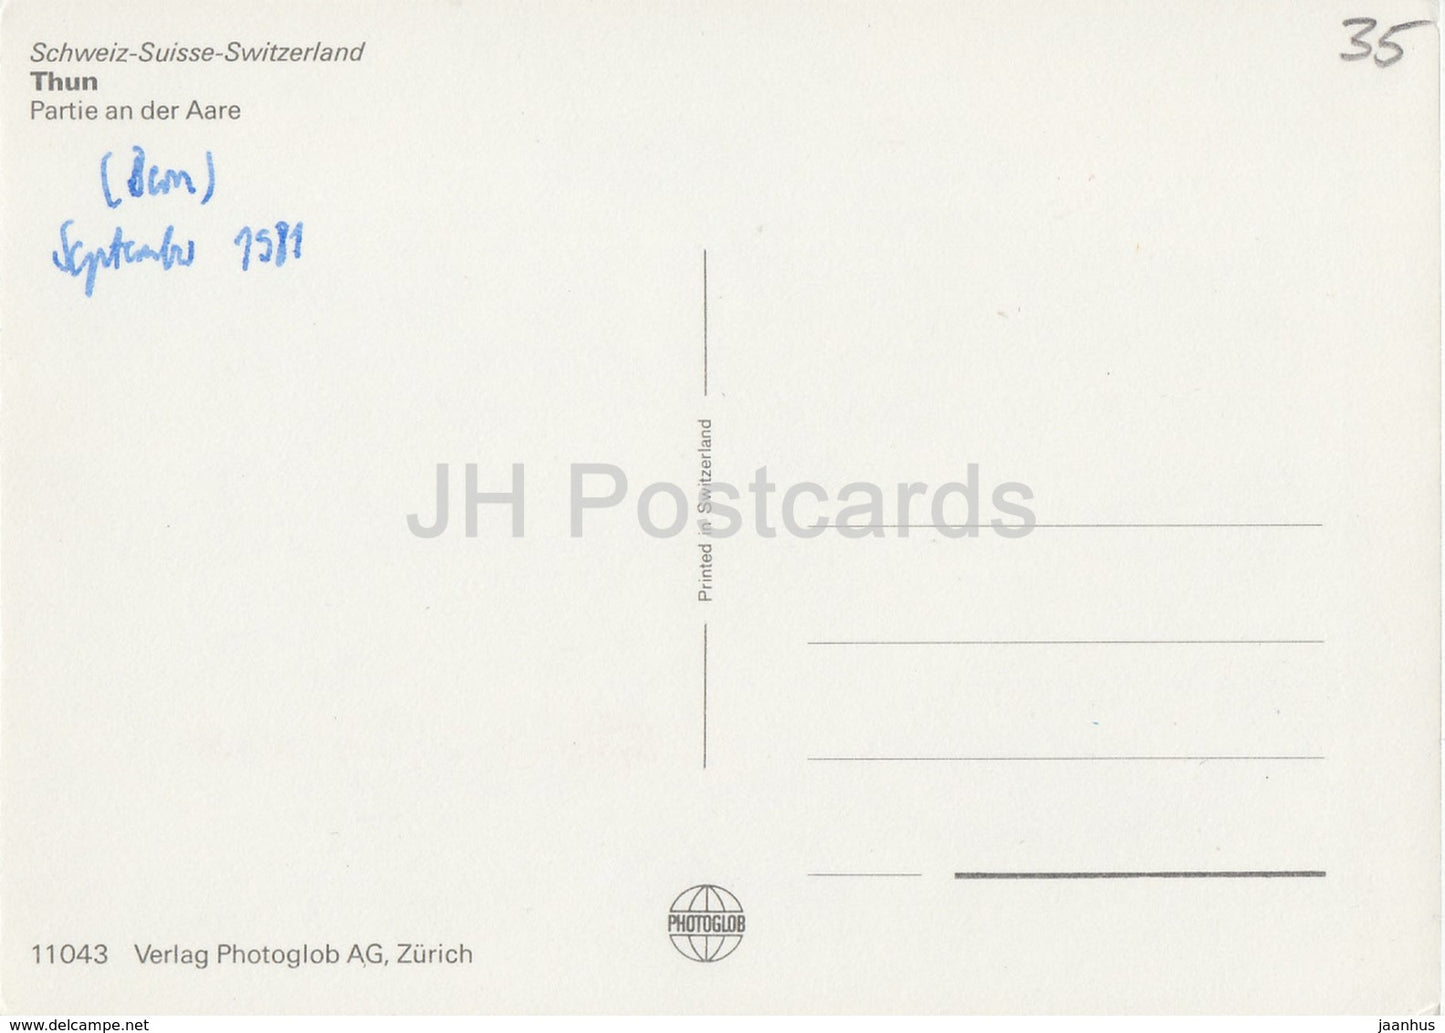 Thoune - Thun - Partie an der Aare - 11043 - 1981 - Schweiz - gebraucht